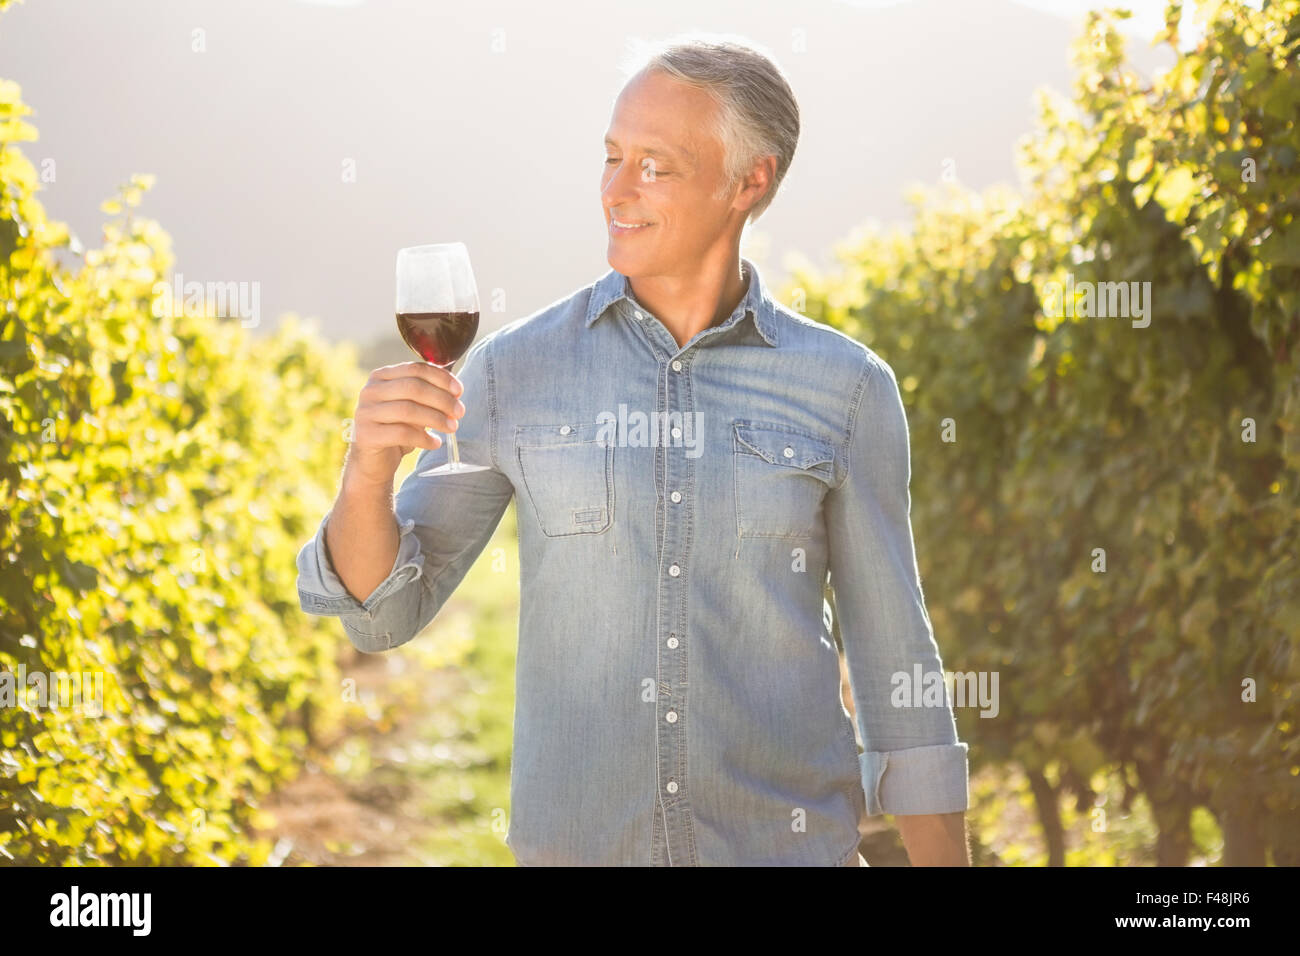 Man with wine glass Stock Photo by ©Tverdohlib.com 94262798